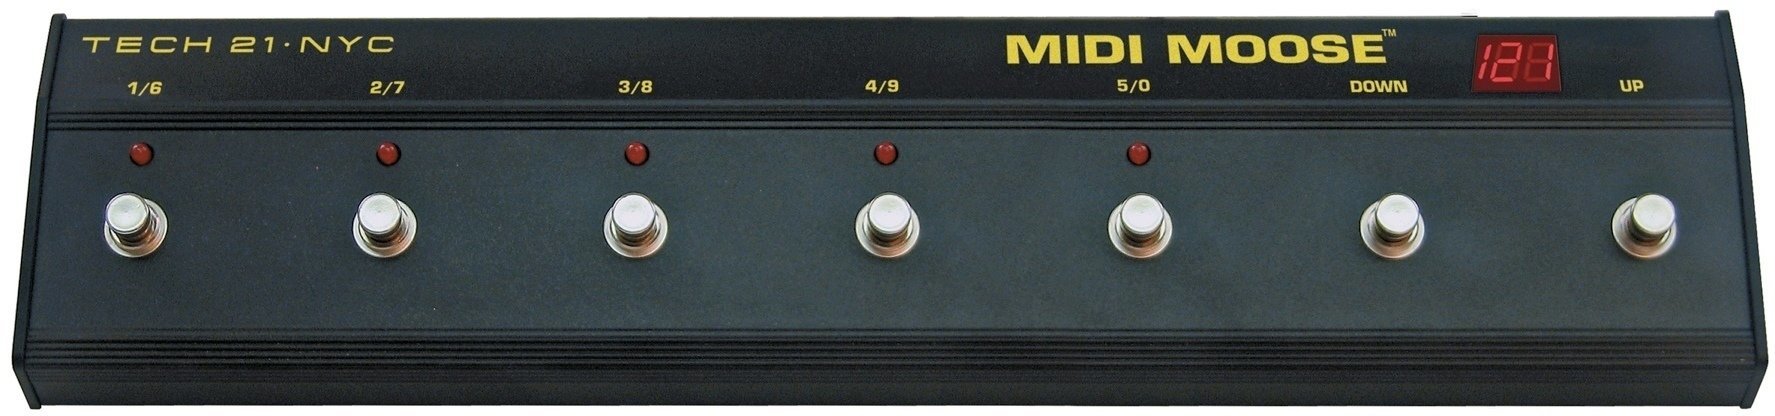 Midi kontroller Tech 21 MIDI Moose